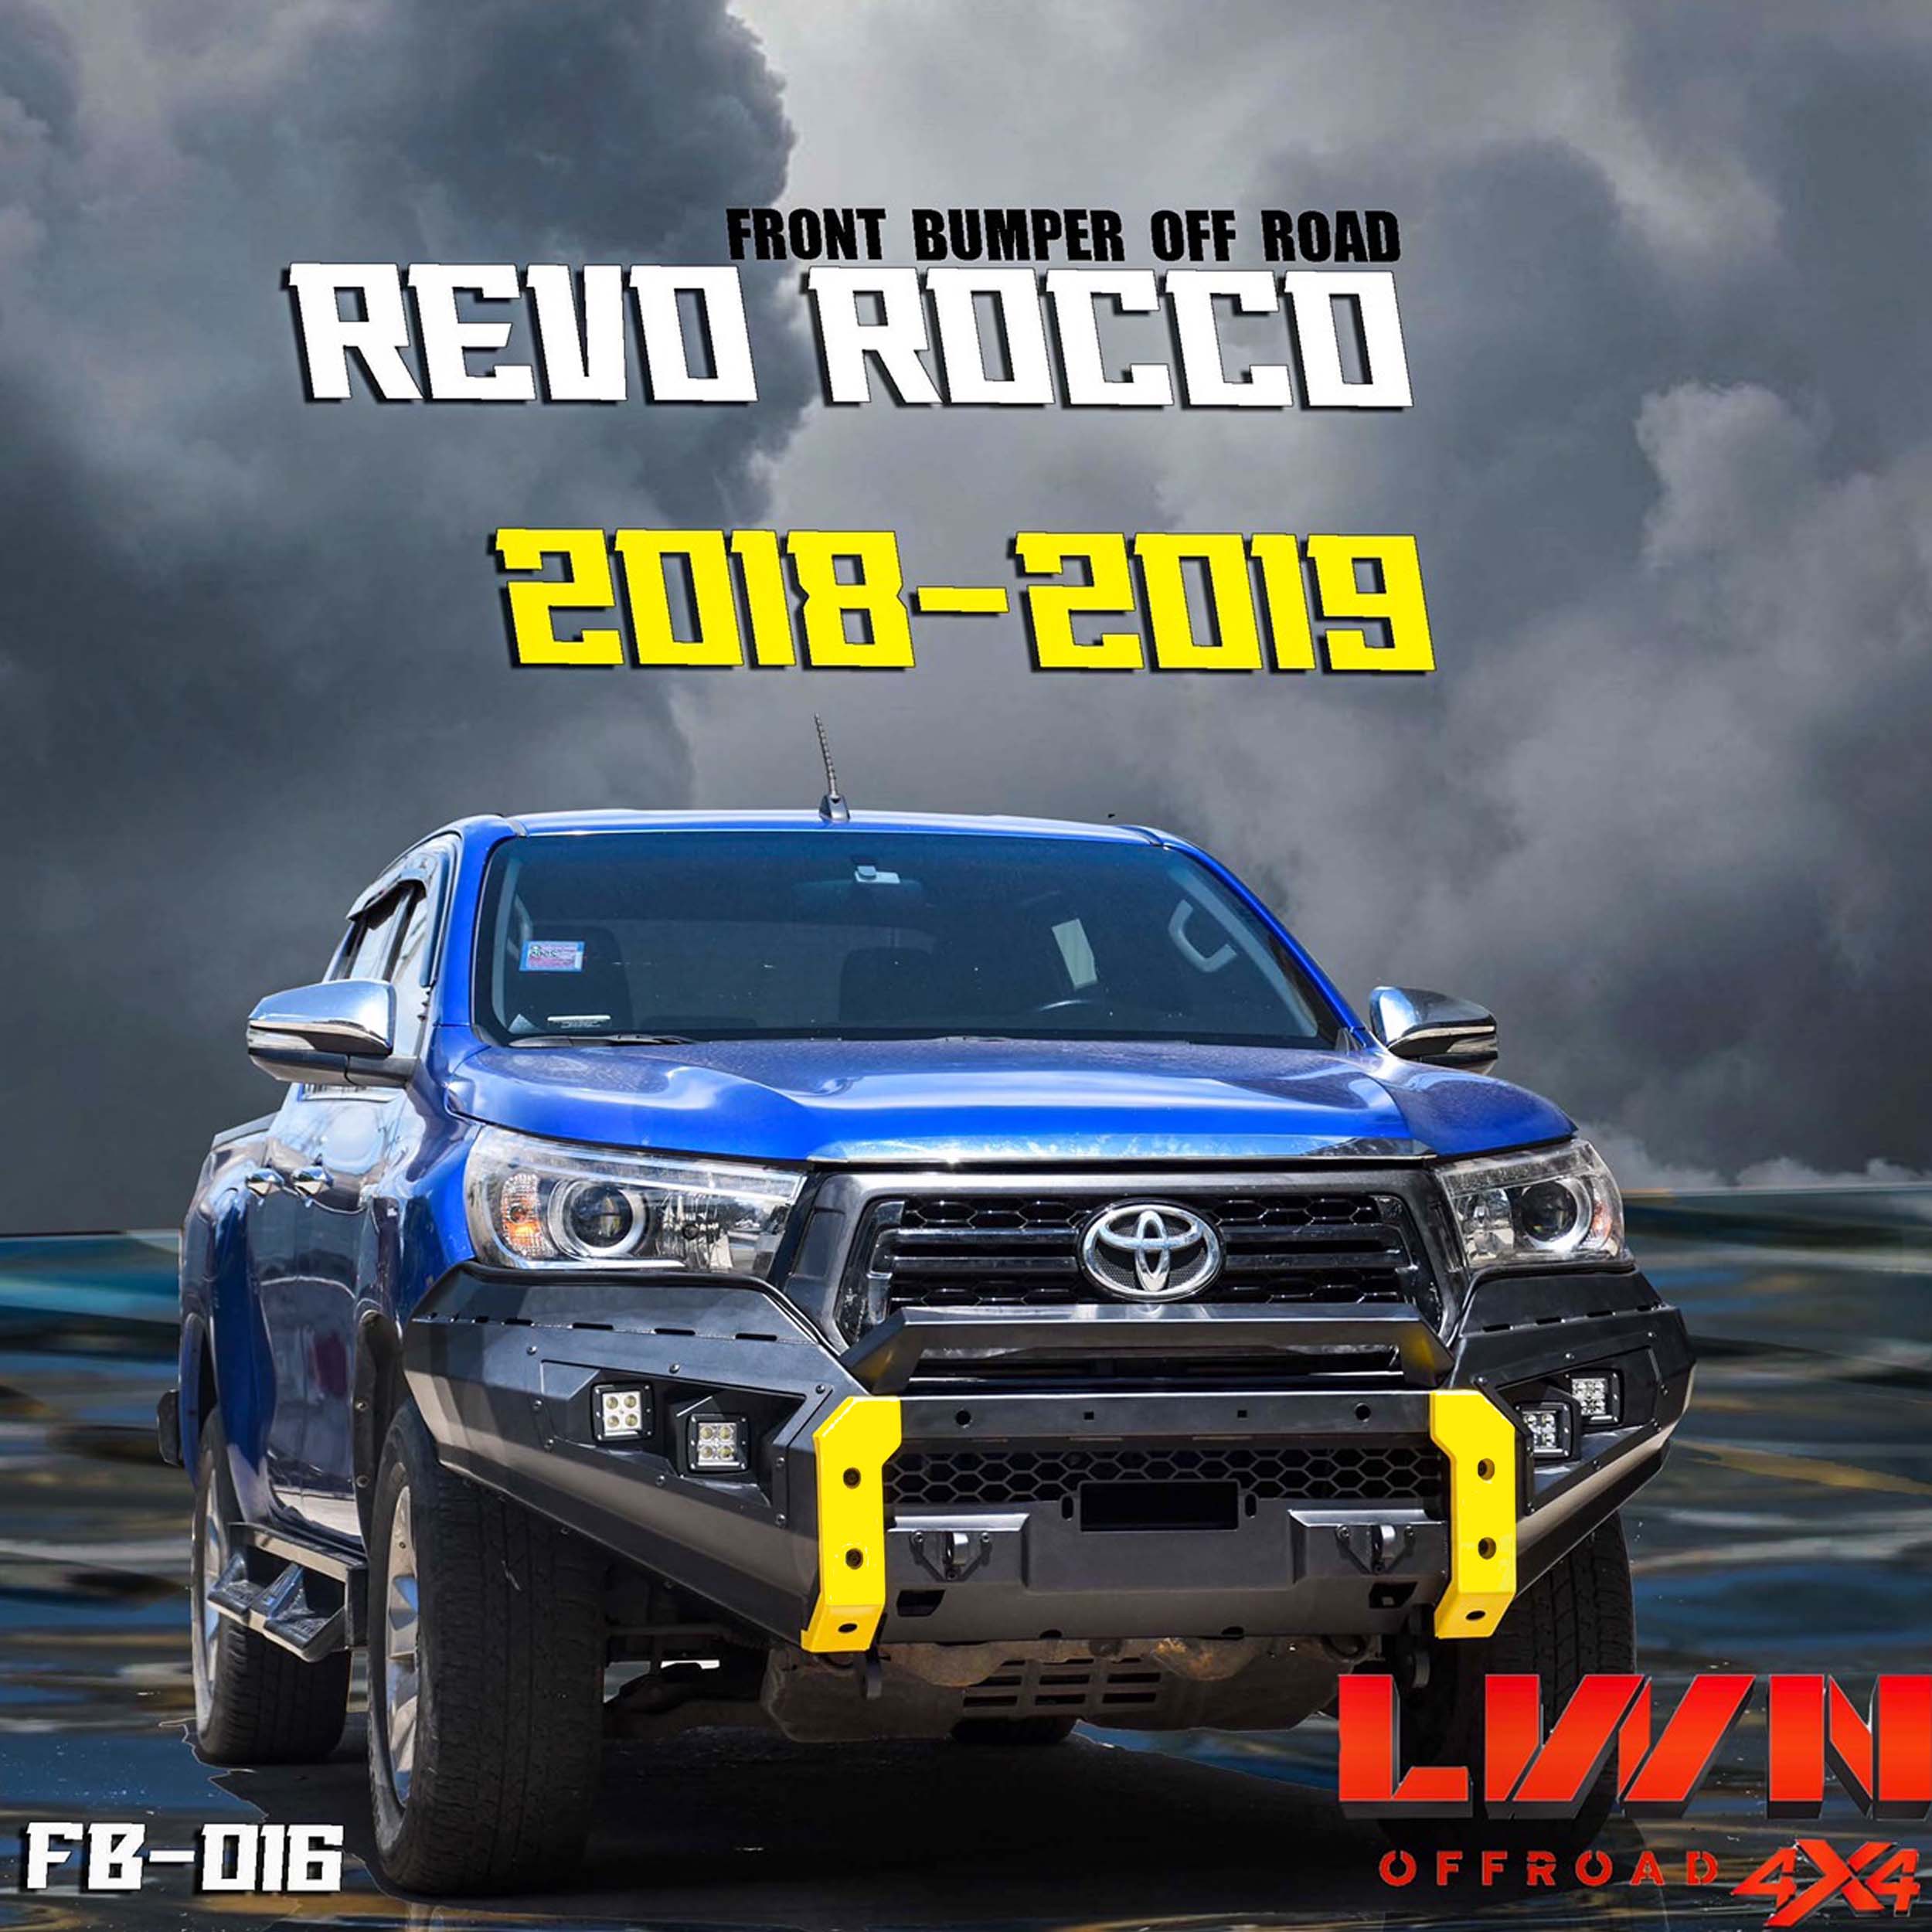 FB-014 Hilux Revo Rocco 2018